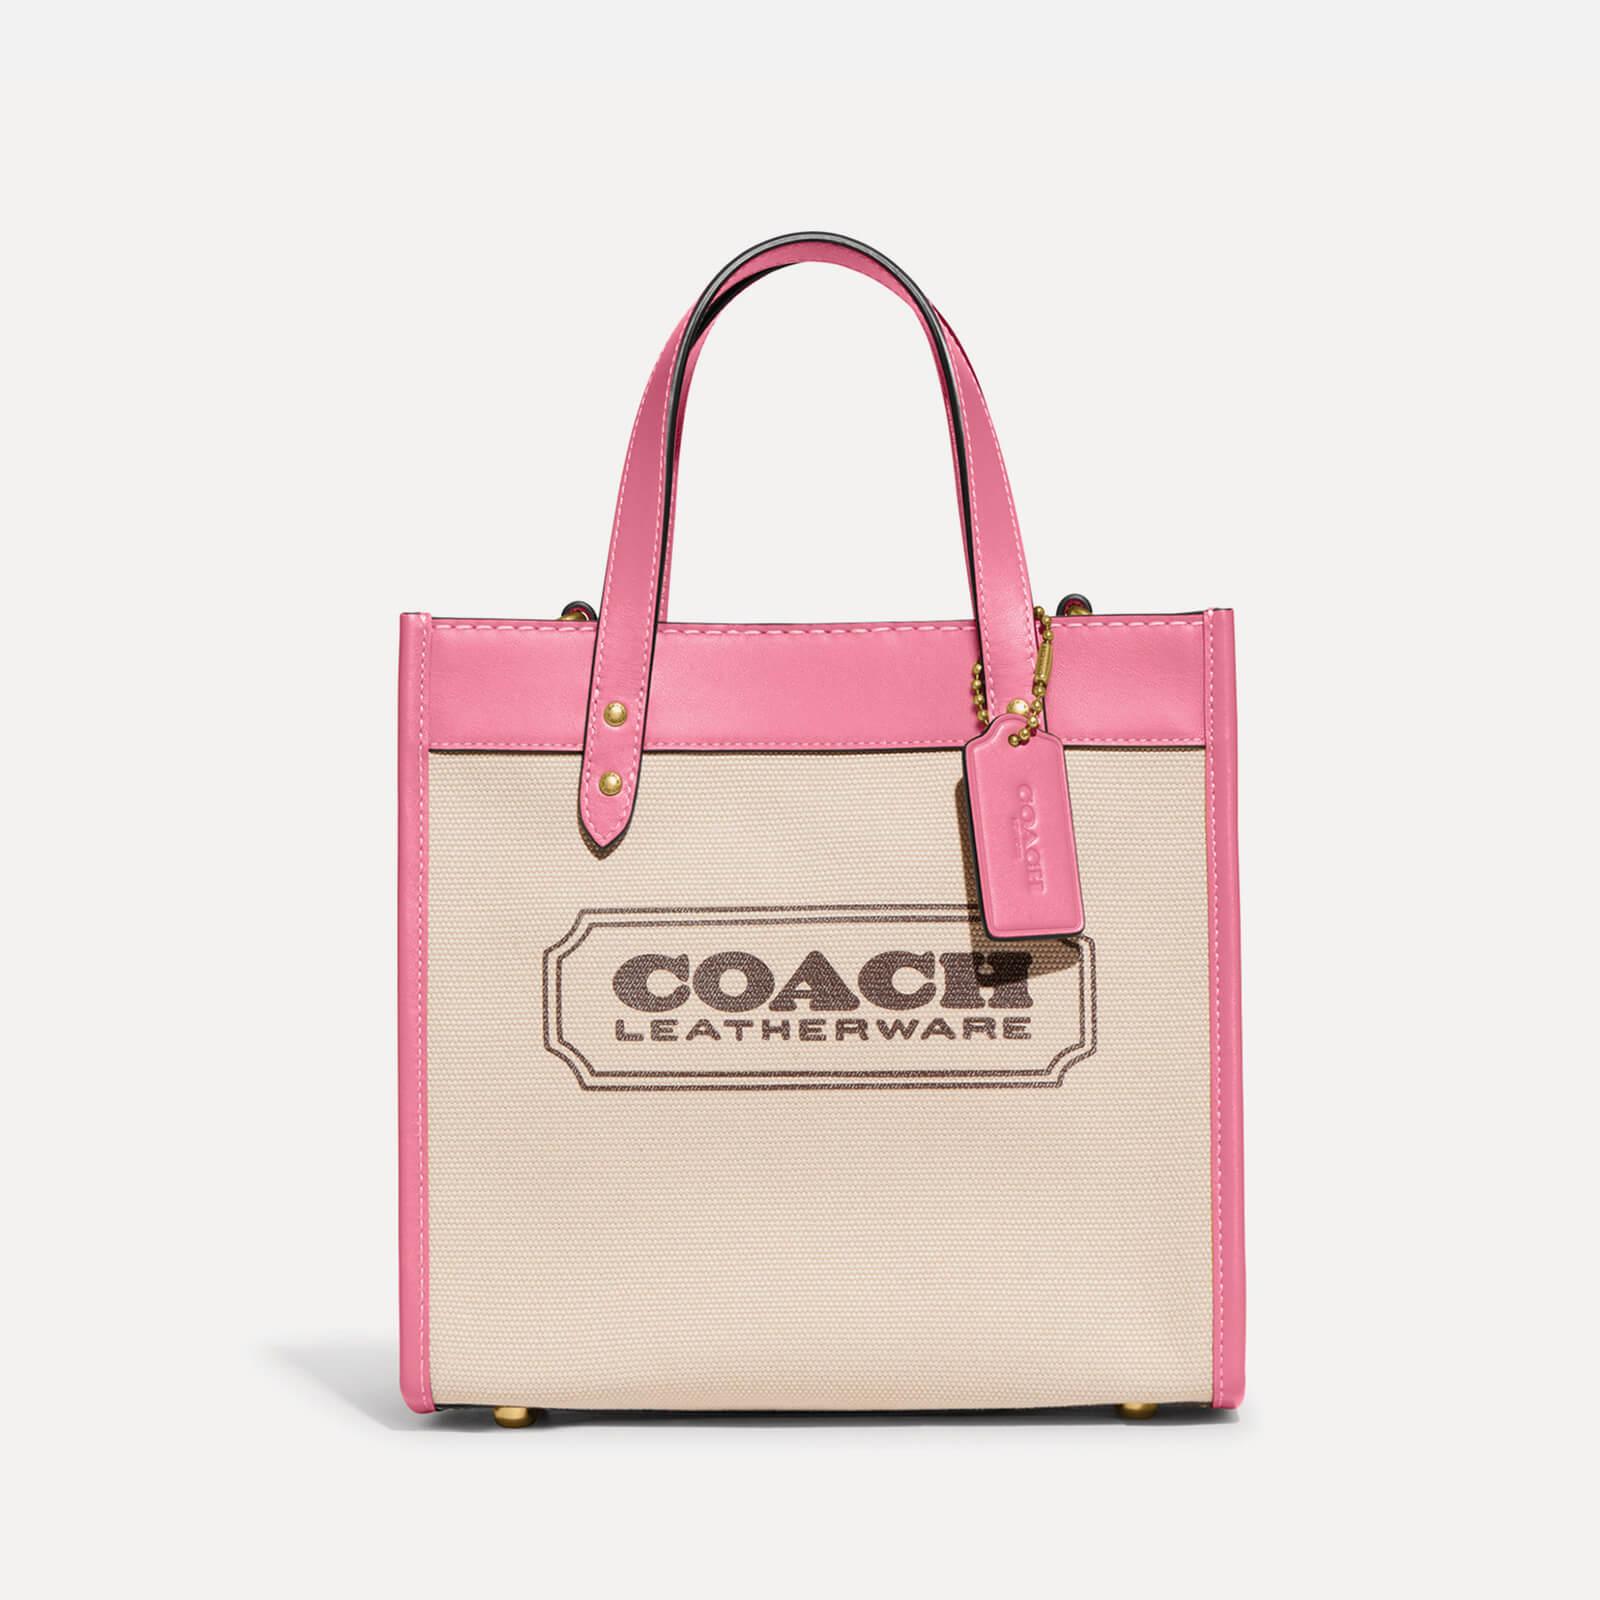 canvas coach tote bag